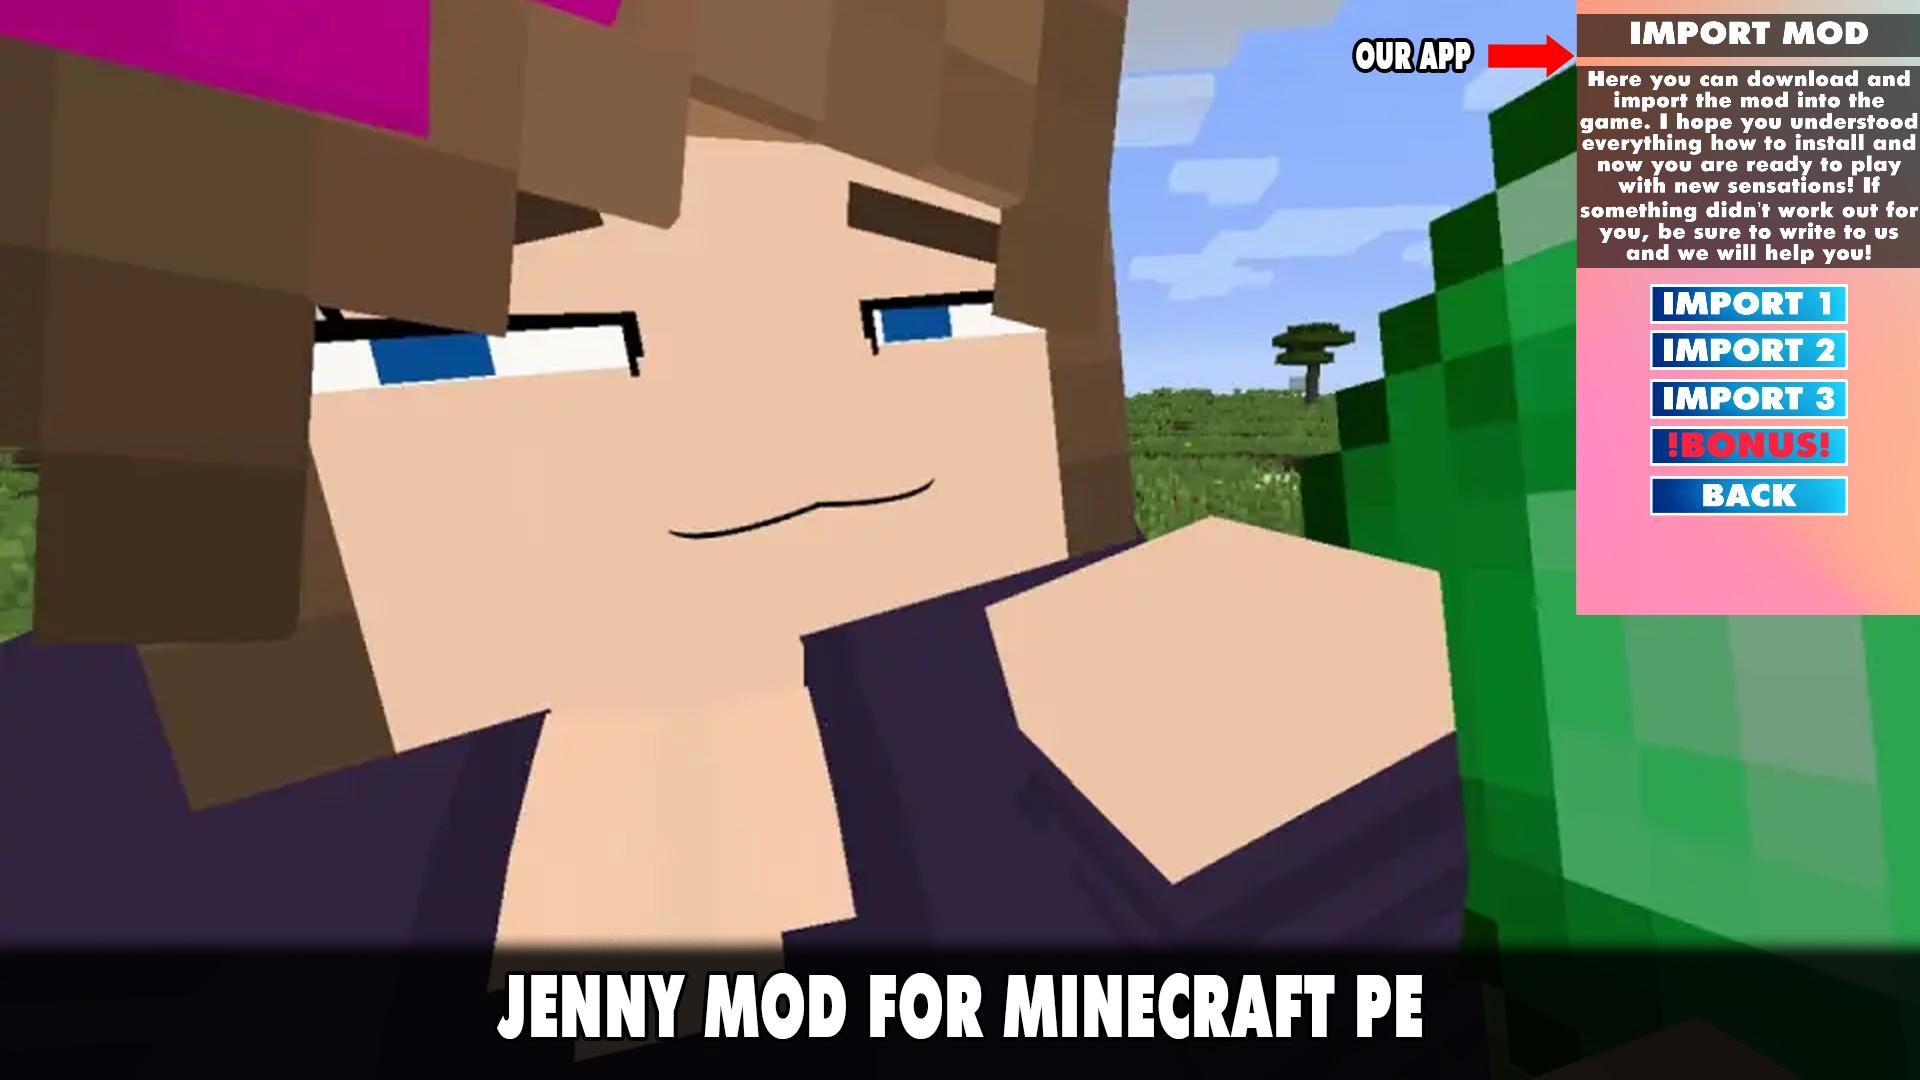 Майнкрафт дженни без цензуры. Дженни мод майнкрафт. Мод на Дженни в майнкрафт пе. Майнкрафт Jenny Mod Luna. Mod Jenny for Minecraft pe 1.19.